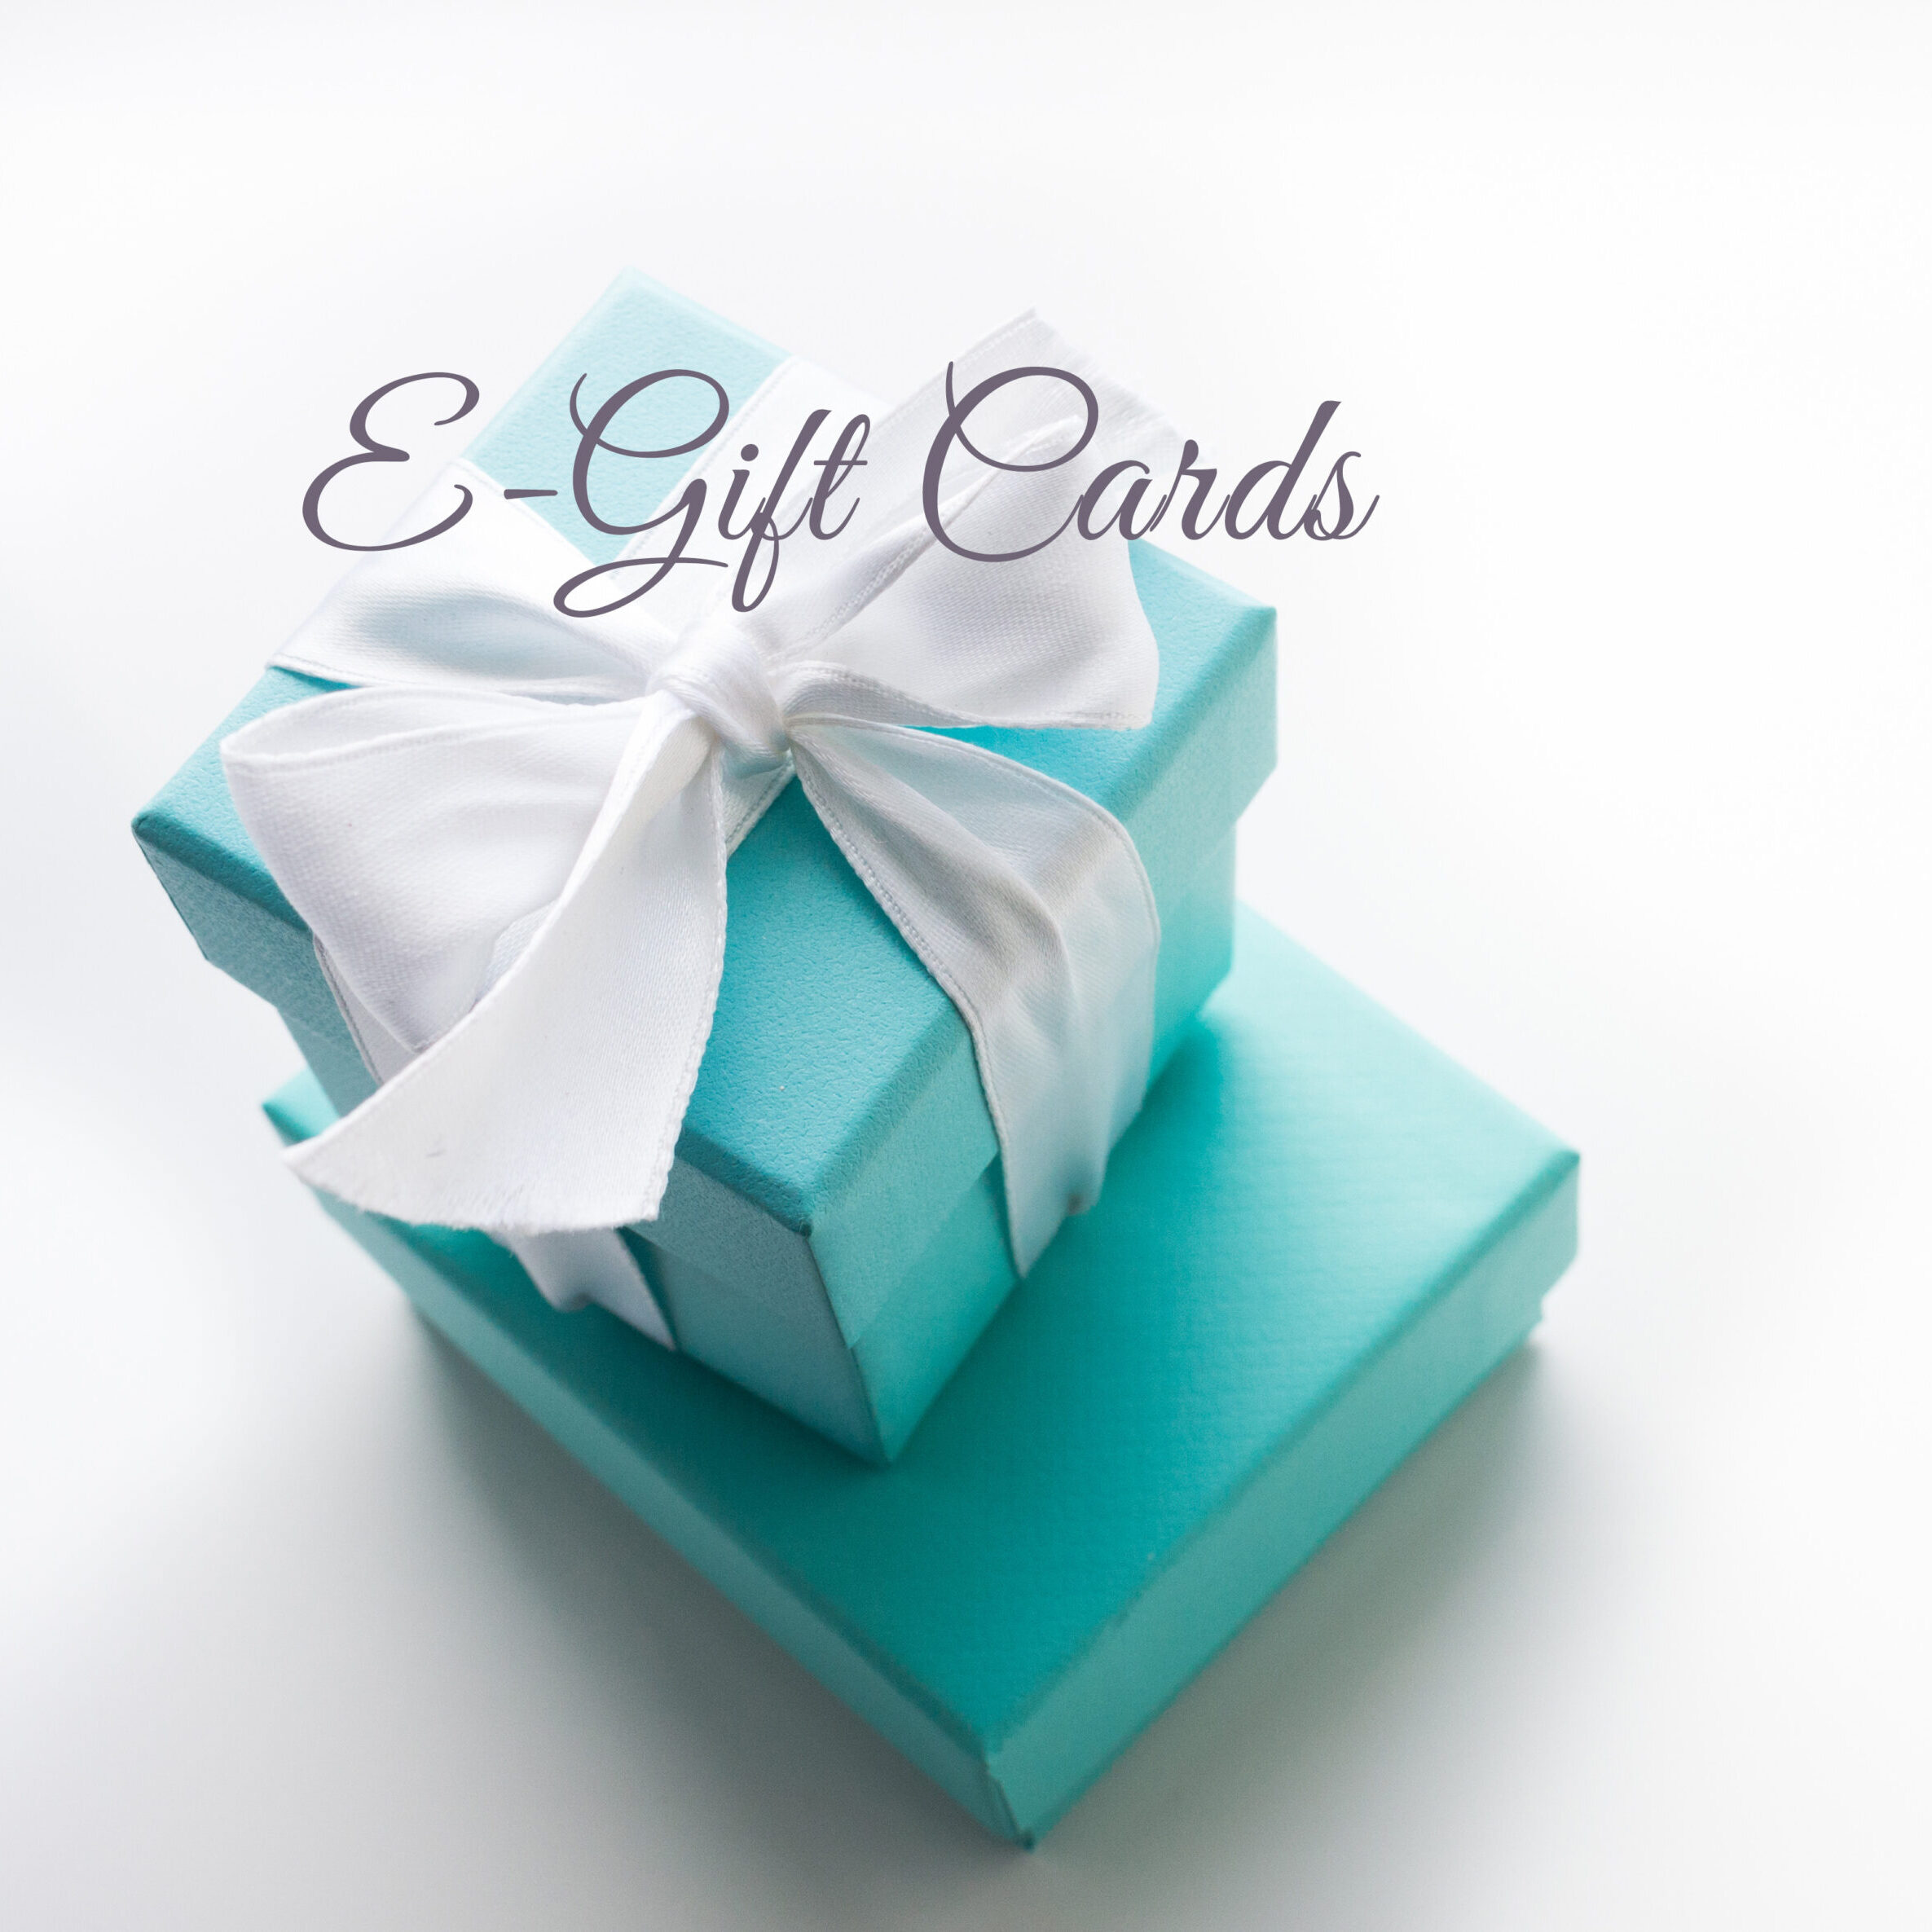 E-giftcard